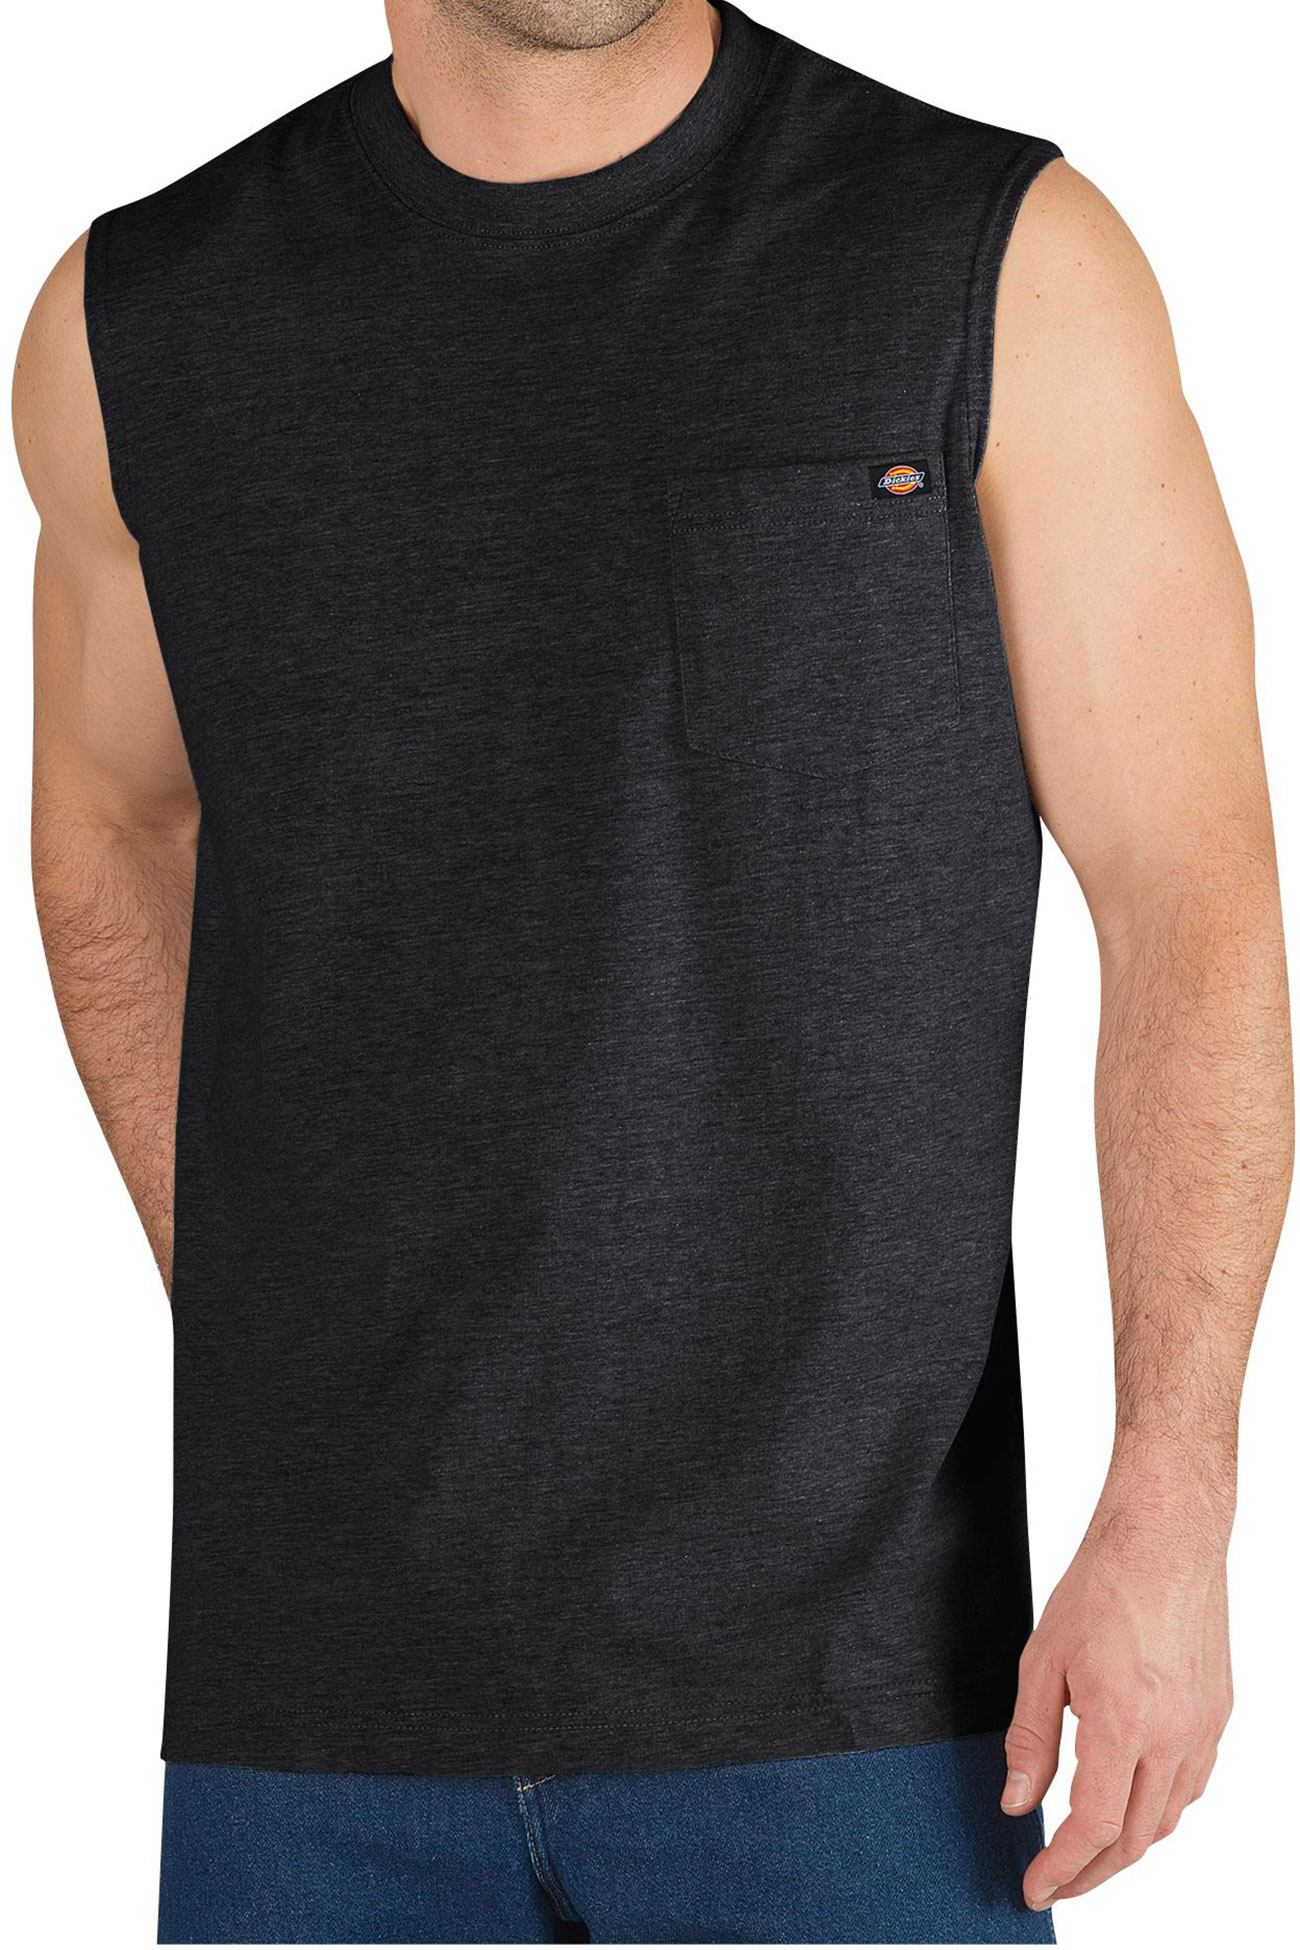 Dickies - WS452 Mens Sleeveless Pocket T-Shirt